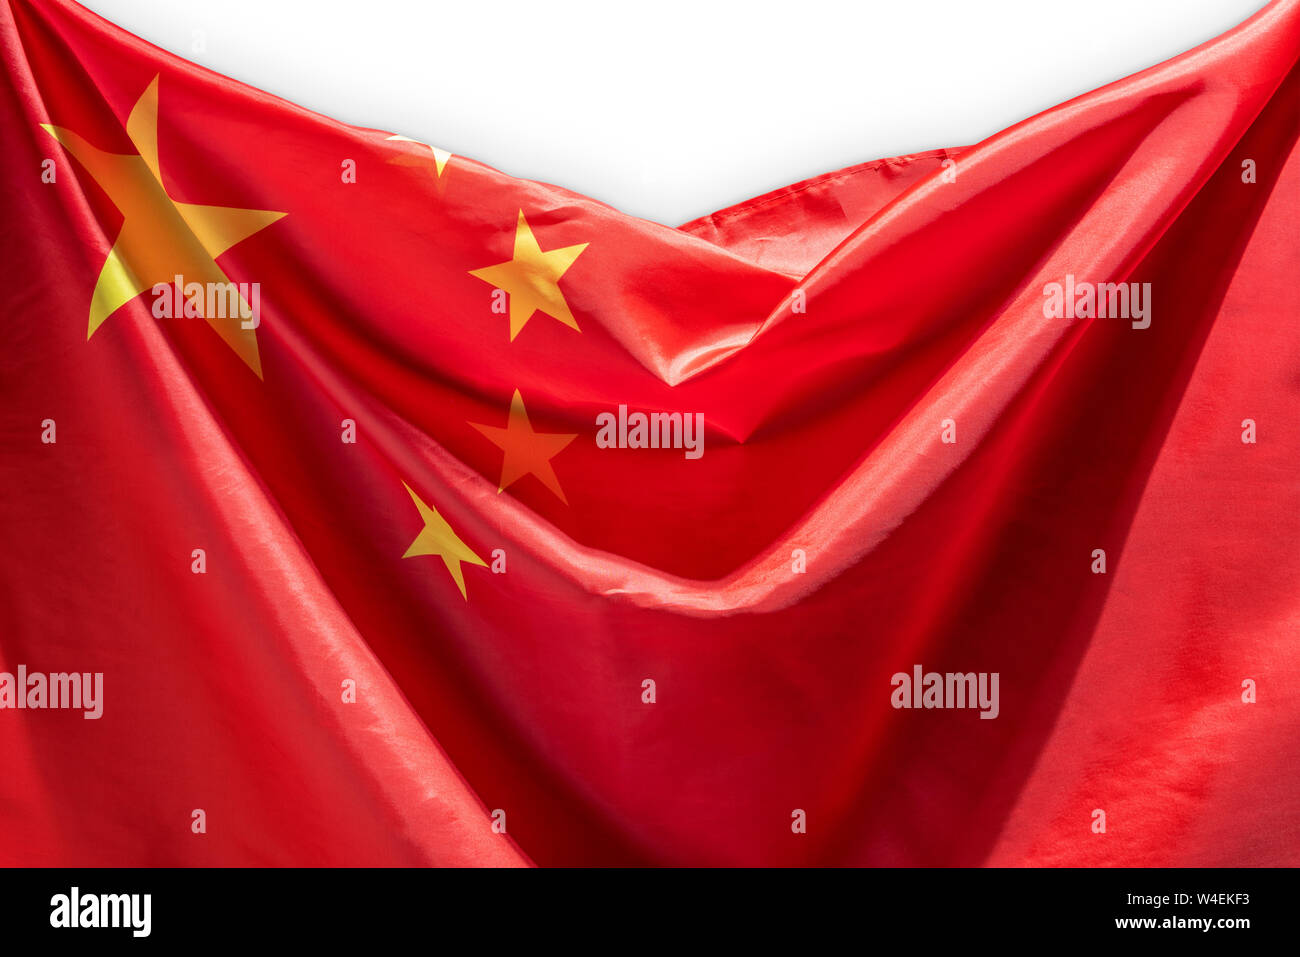 Chinese national flag isolated over white background Stock Photo